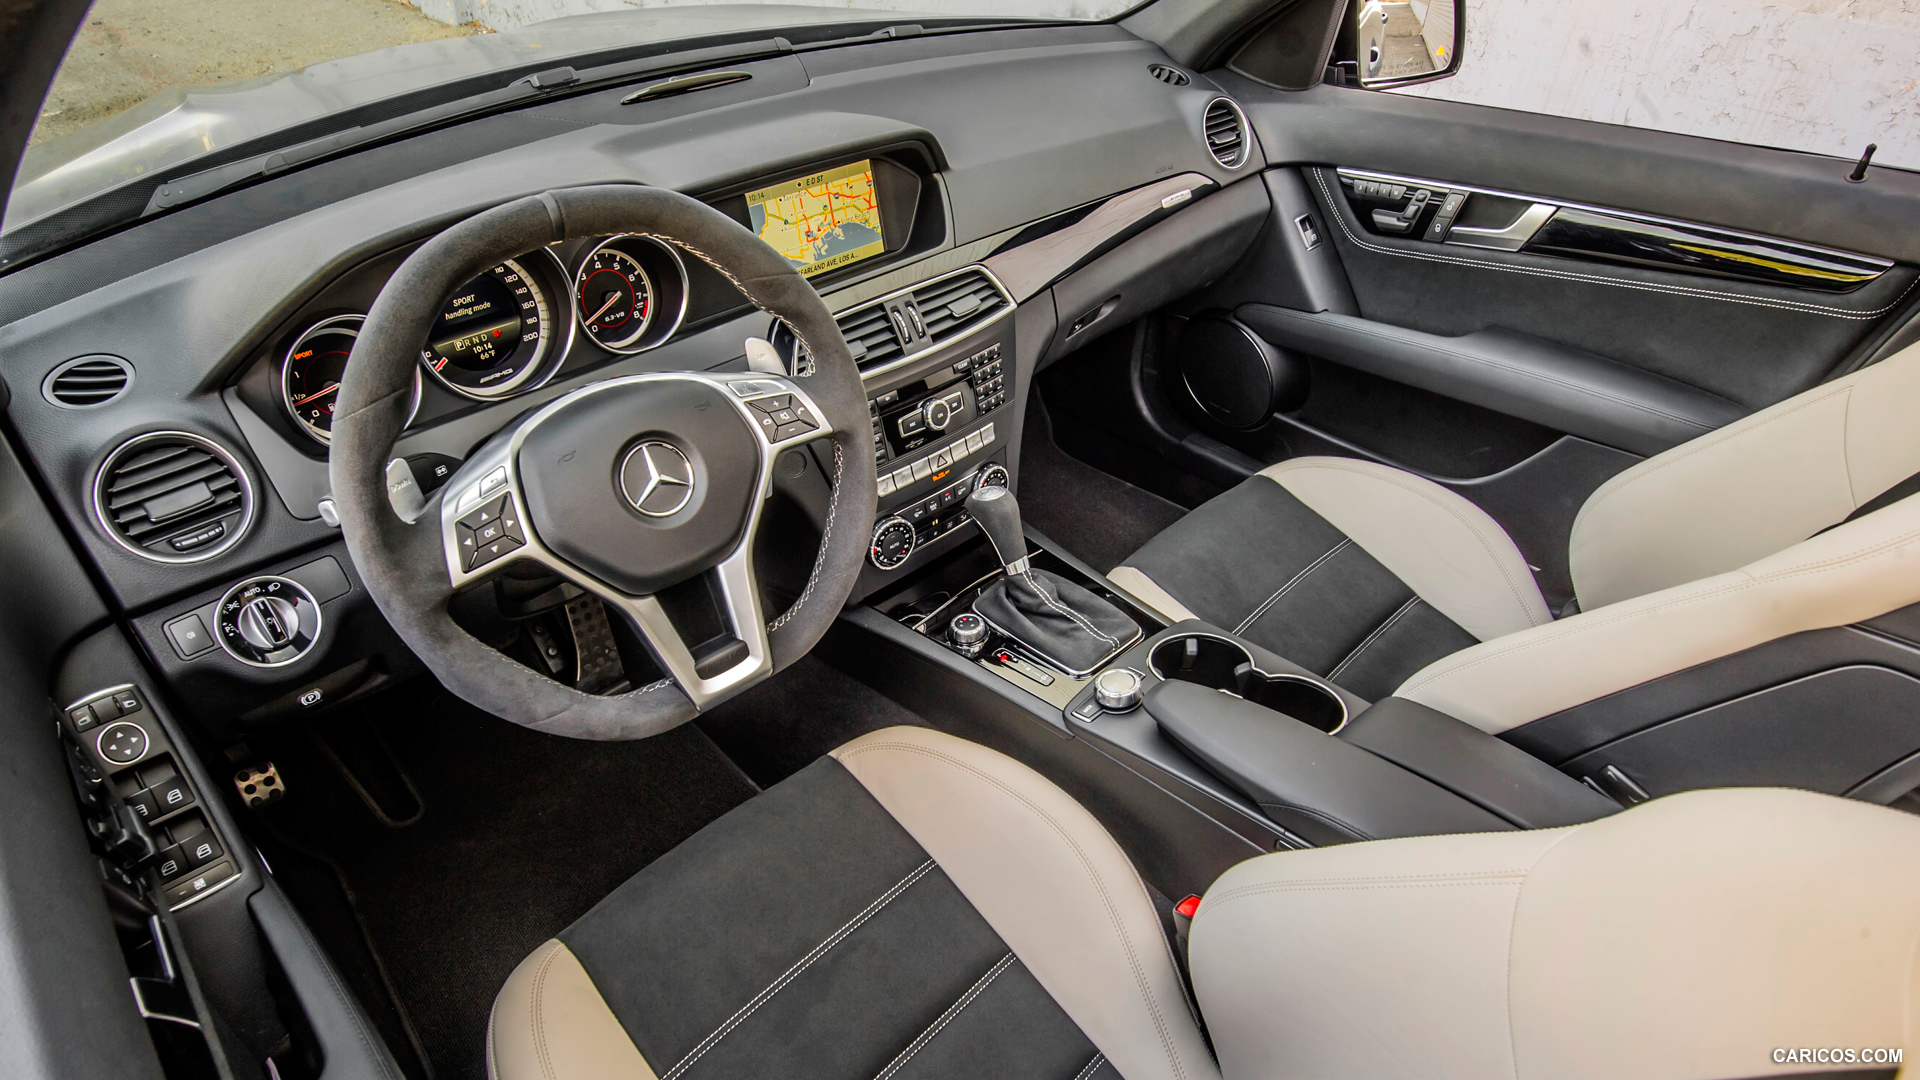 2014 Mercedes-Benz C 63 AMG Edition 507 Sedan (US Version)  - Interior, #10 of 15